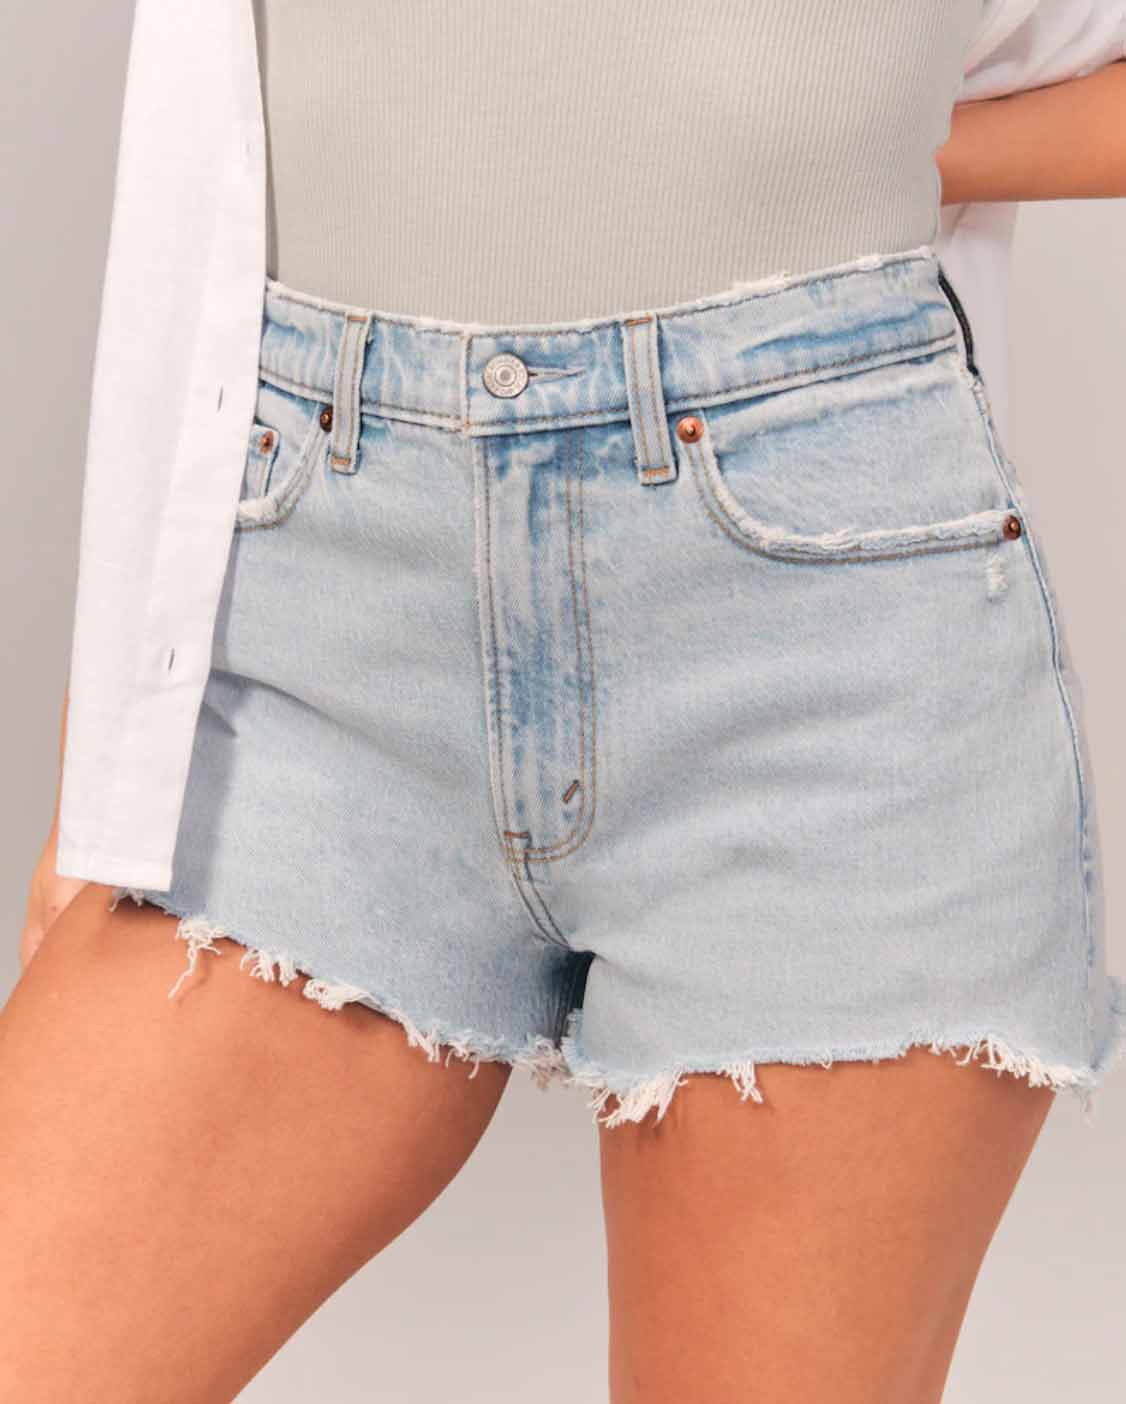 jean shorts for women